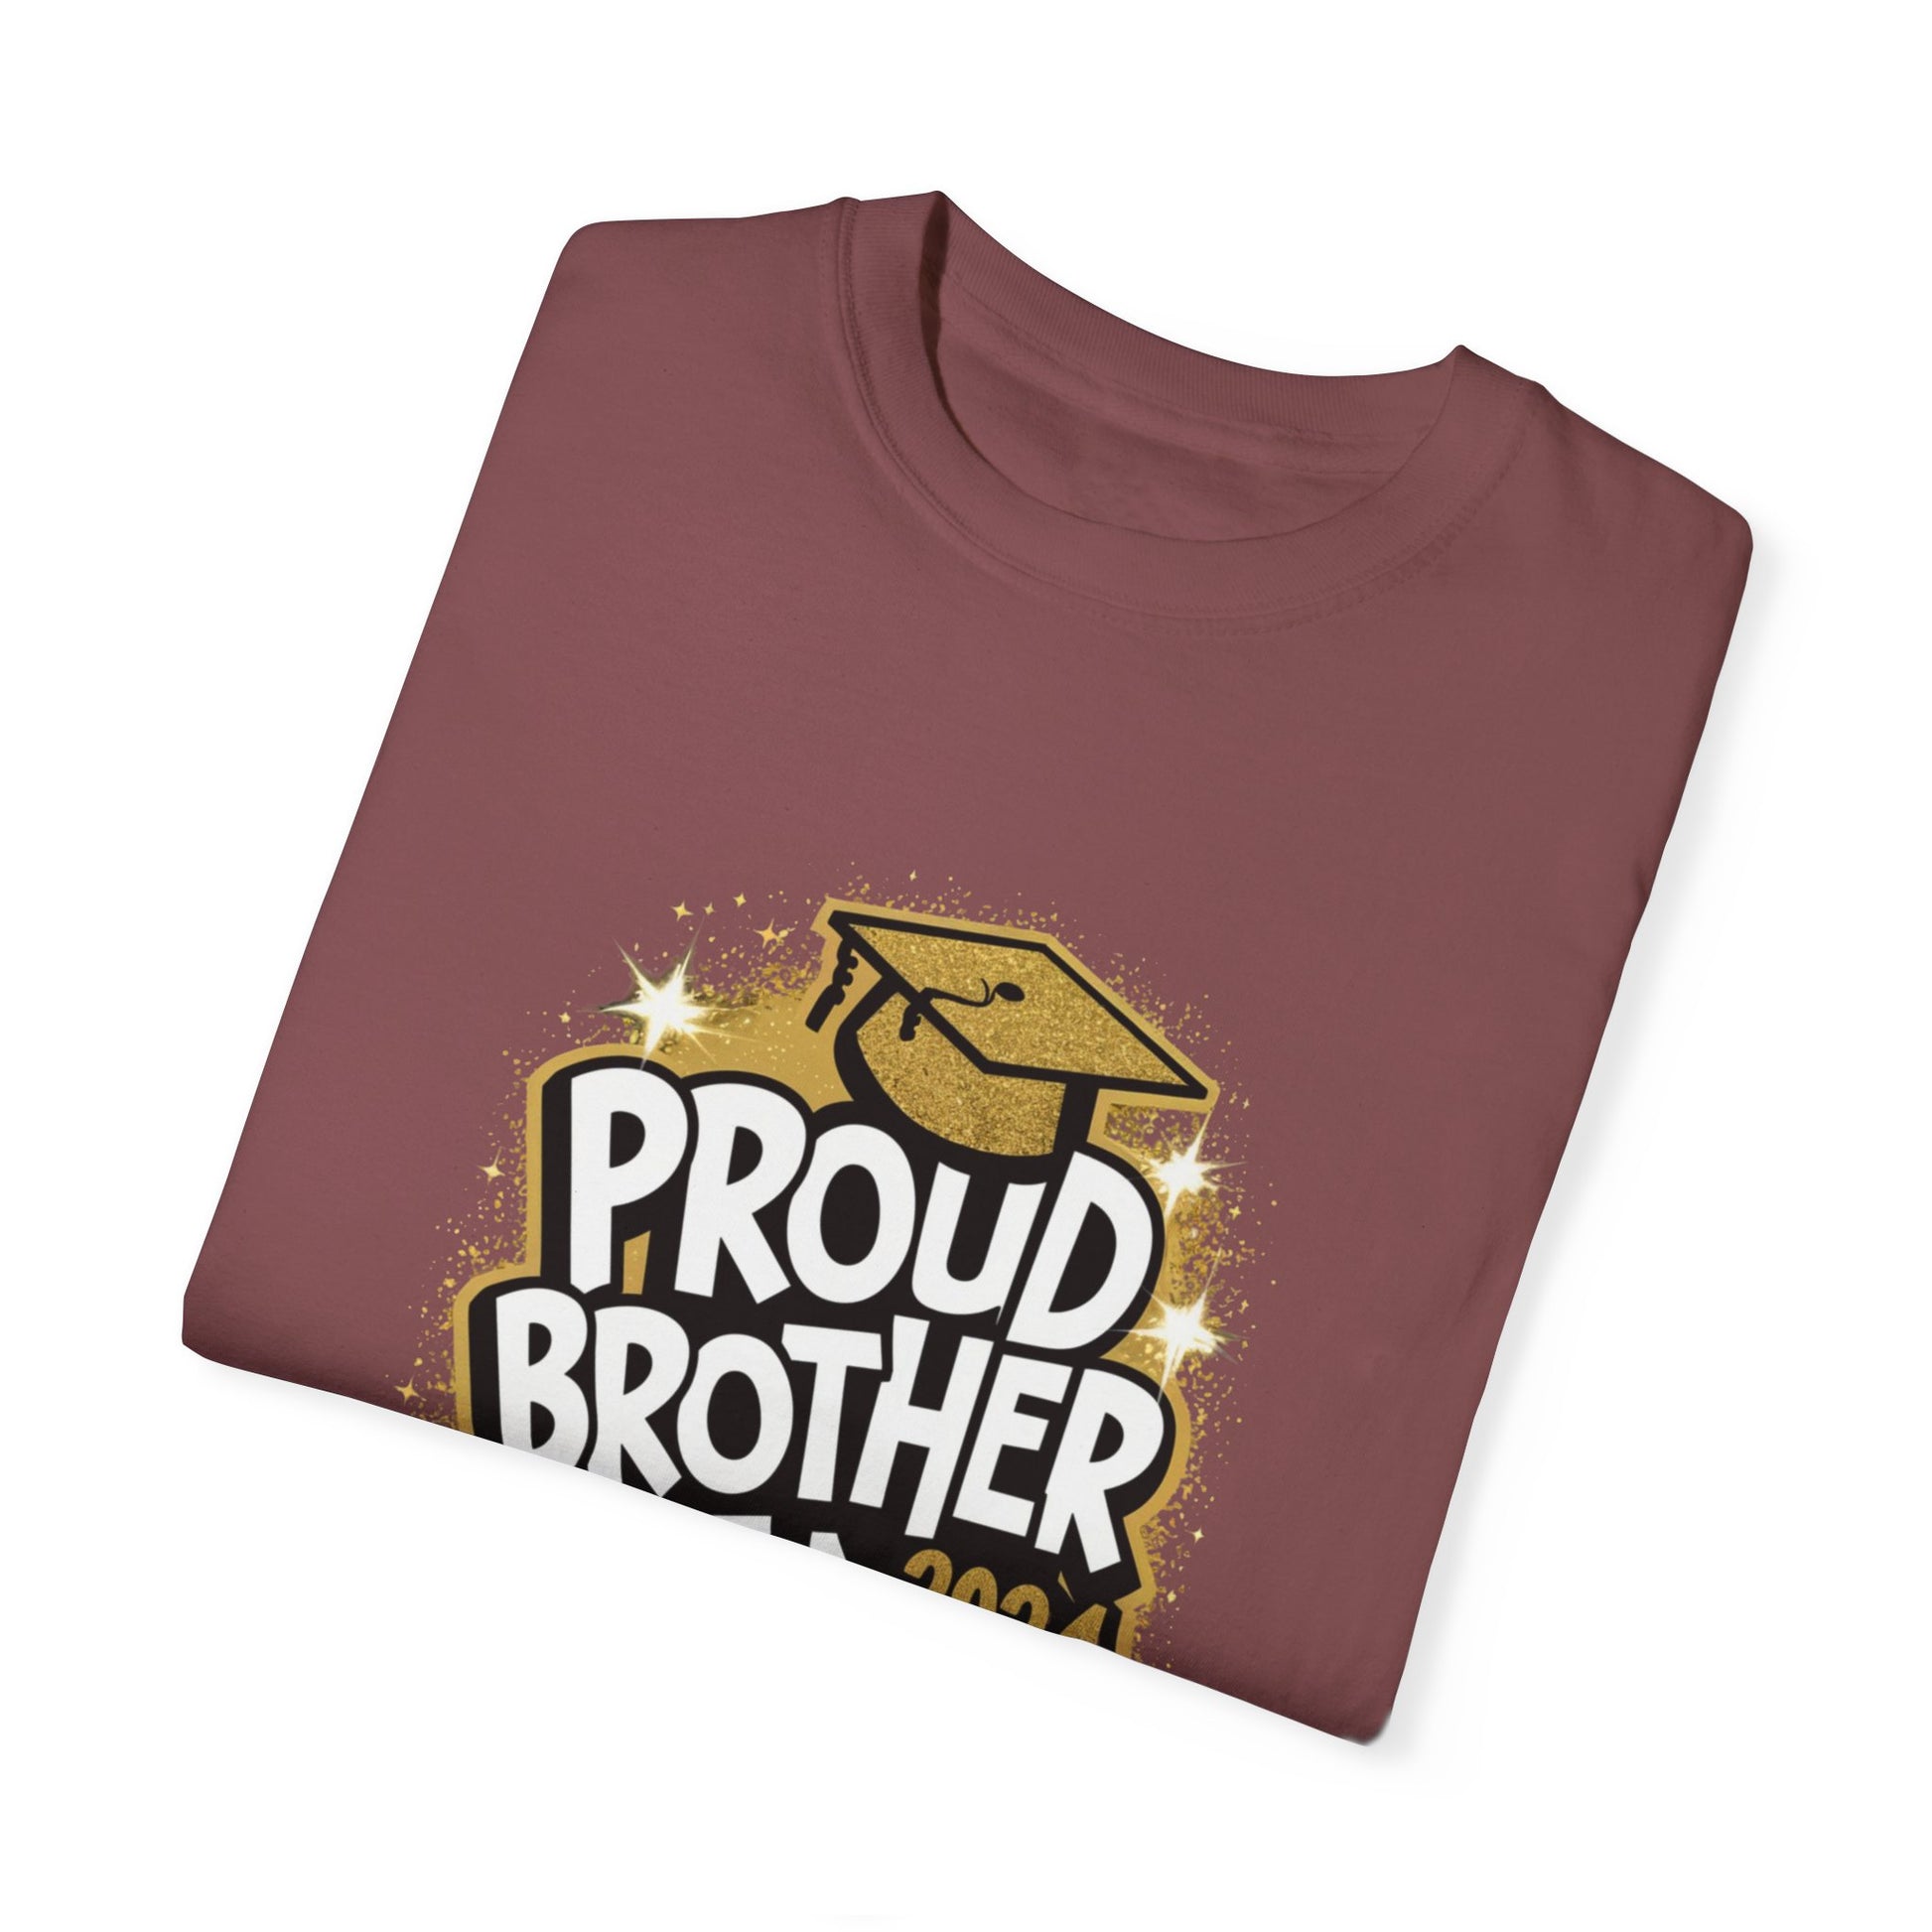 Proud Brother of a 2024 Graduate Unisex Garment-dyed T-shirt Cotton Funny Humorous Graphic Soft Premium Unisex Men Women Brick T-shirt Birthday Gift-29